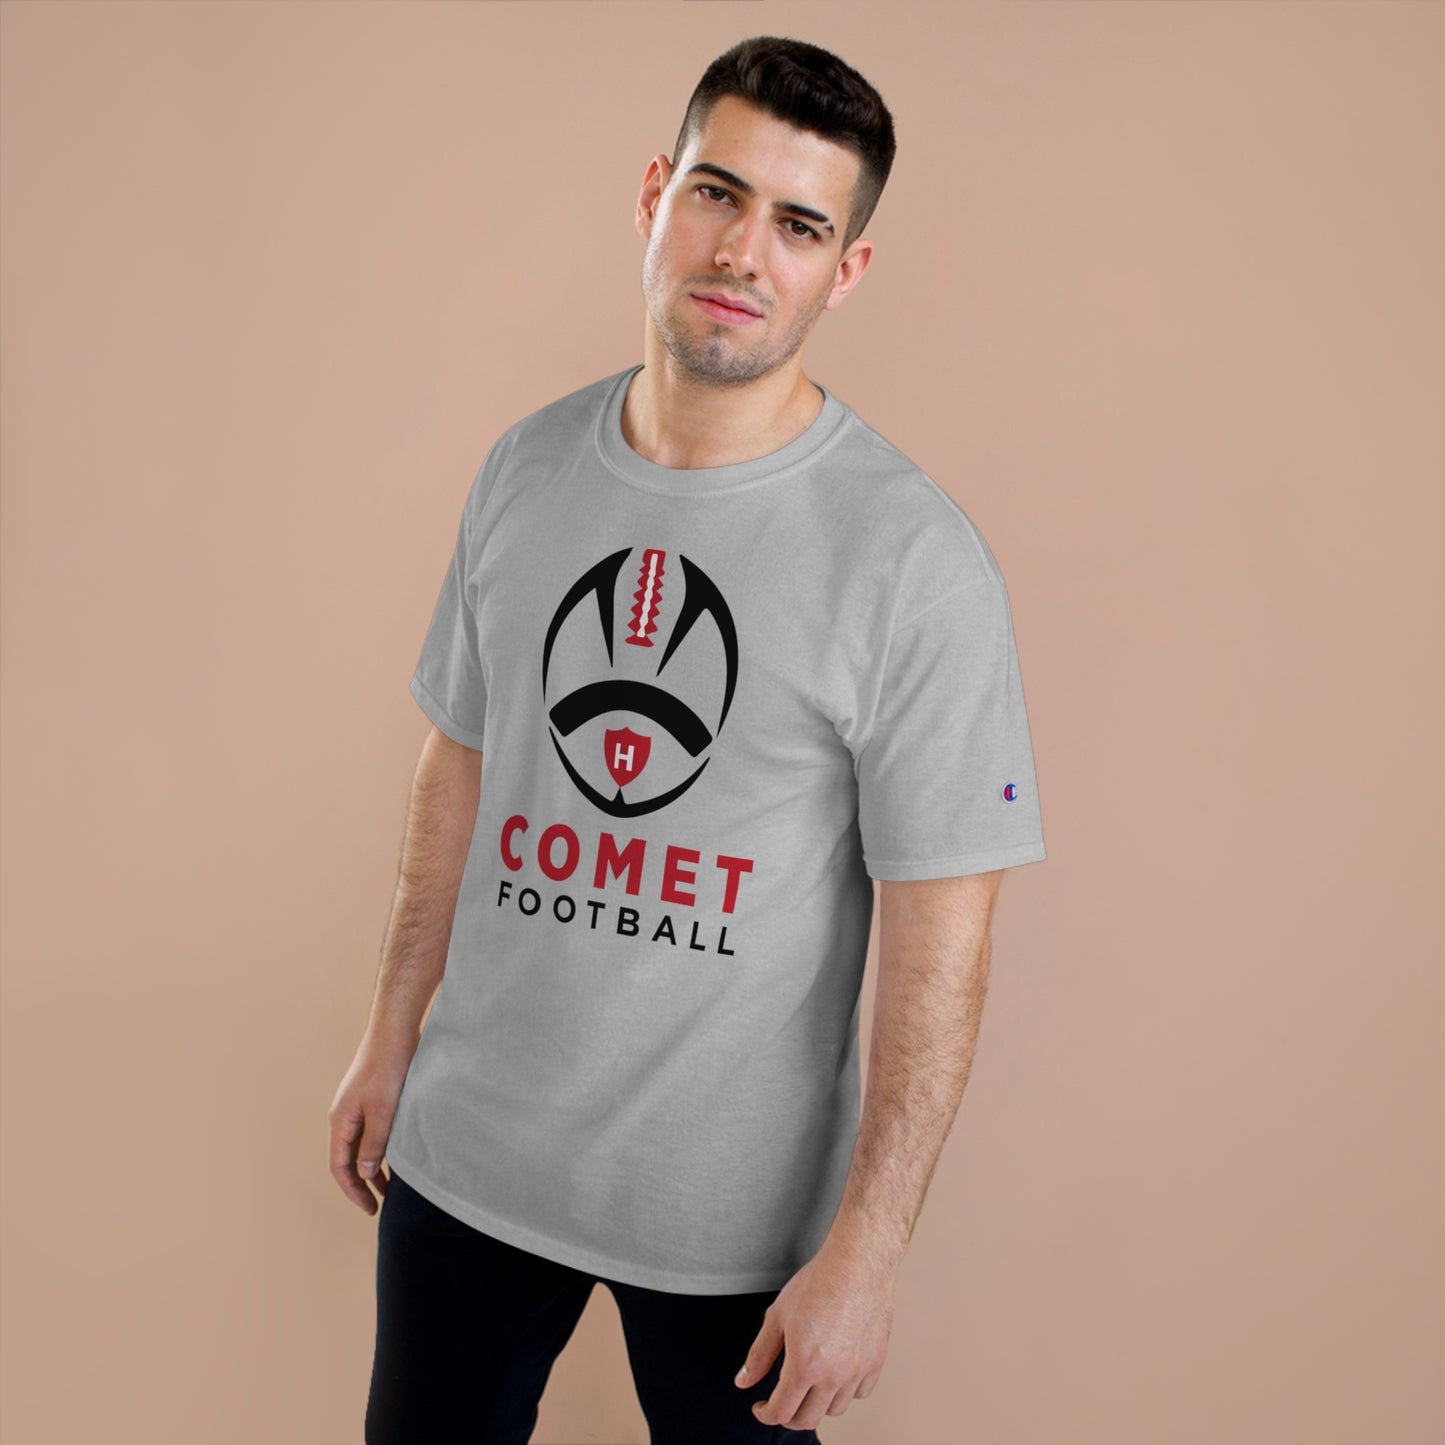 Comet Football - Champion T-Shirt